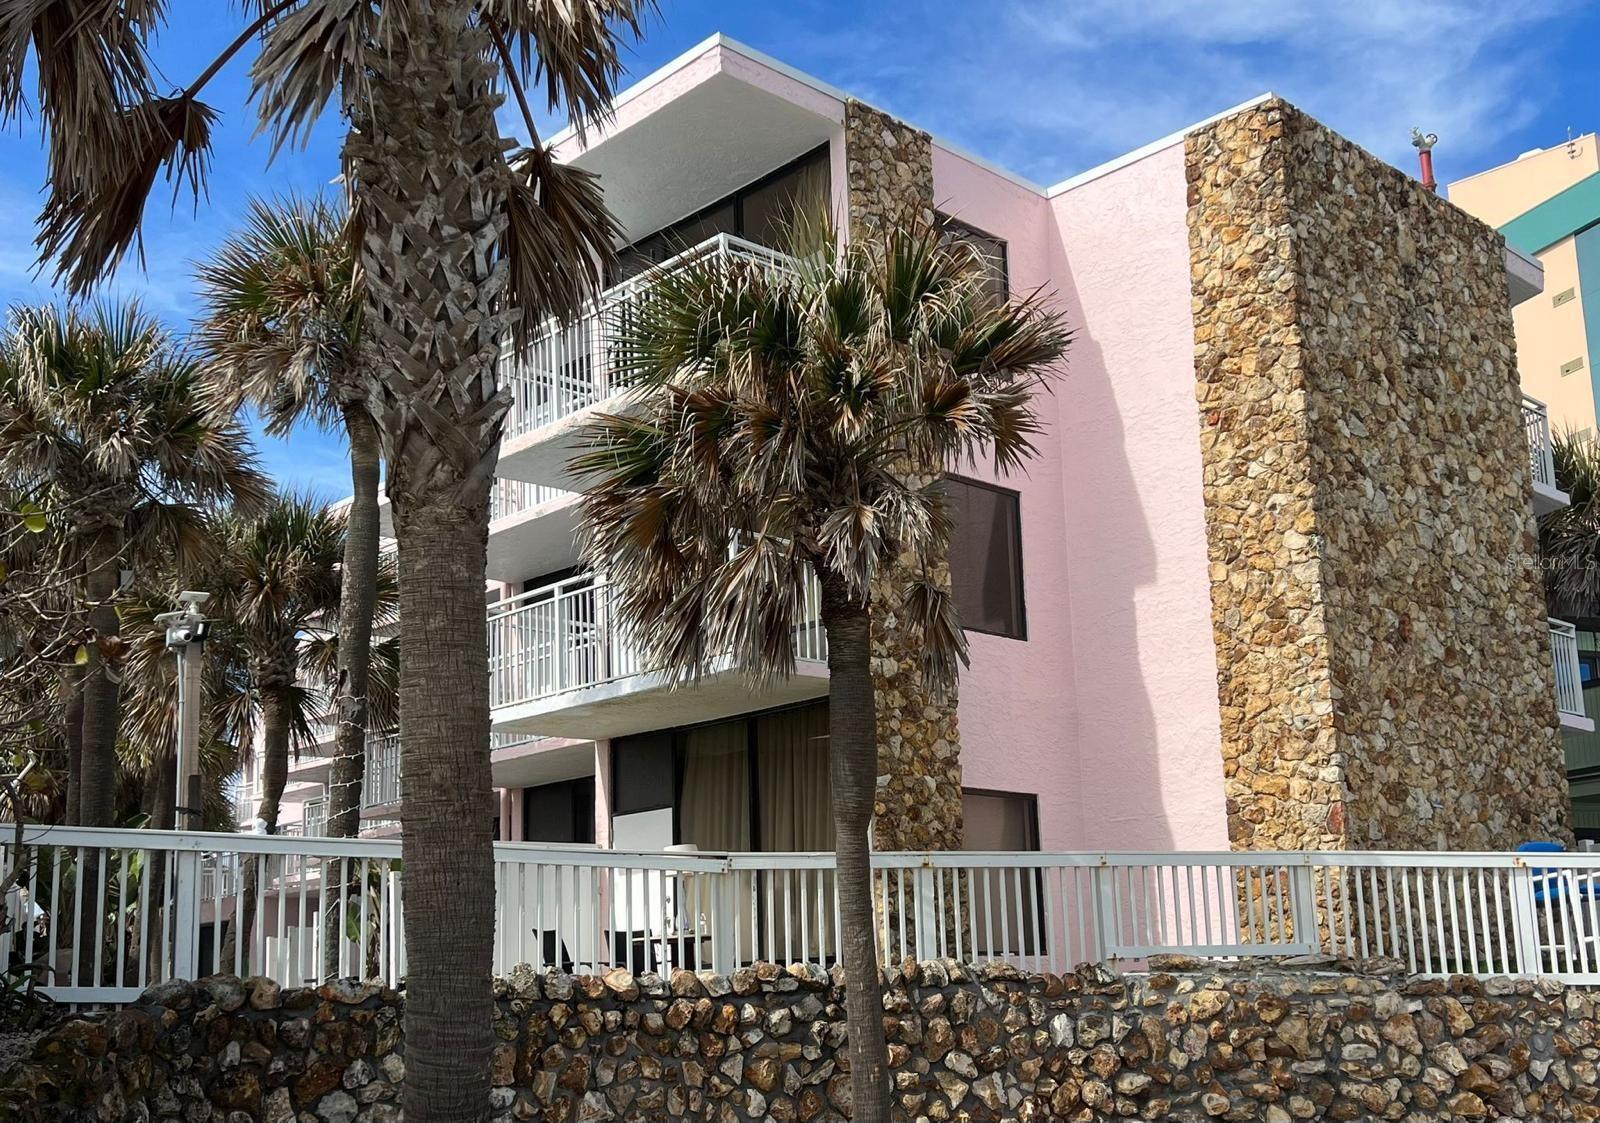 Daytona Beach Shores Beachfront Hotel For Sale - 27 Rooms $5,949,000